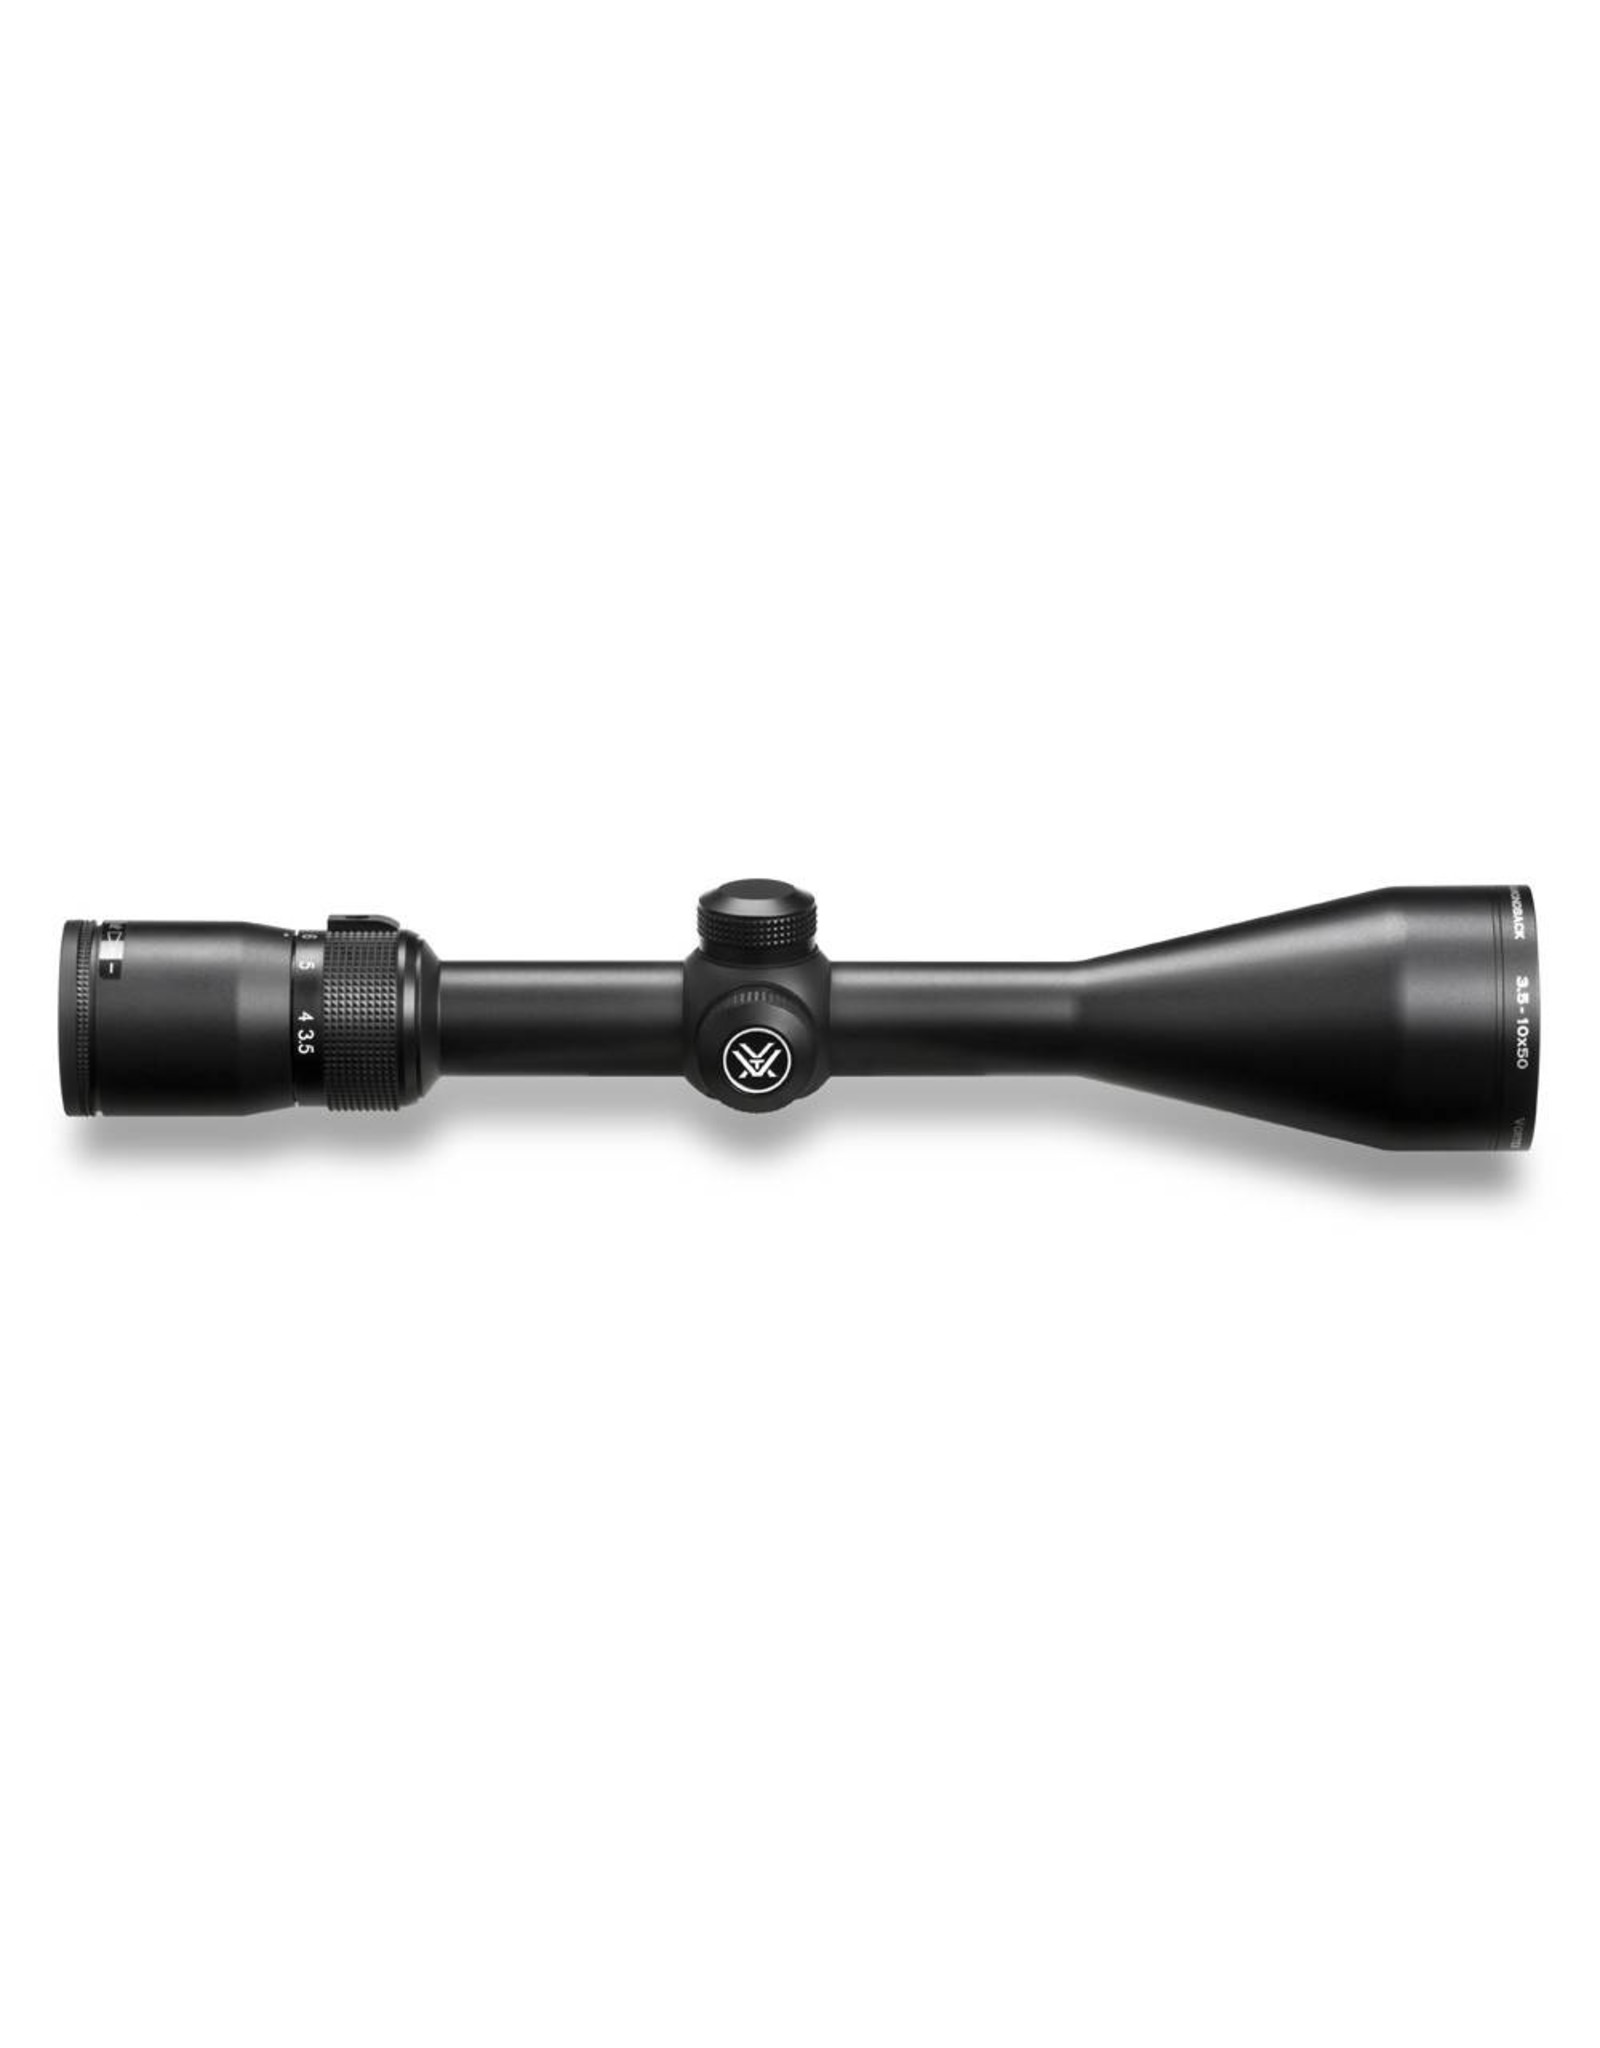 Vortex Vortex Diamondback 3.5-10x50 Riflescope BDC